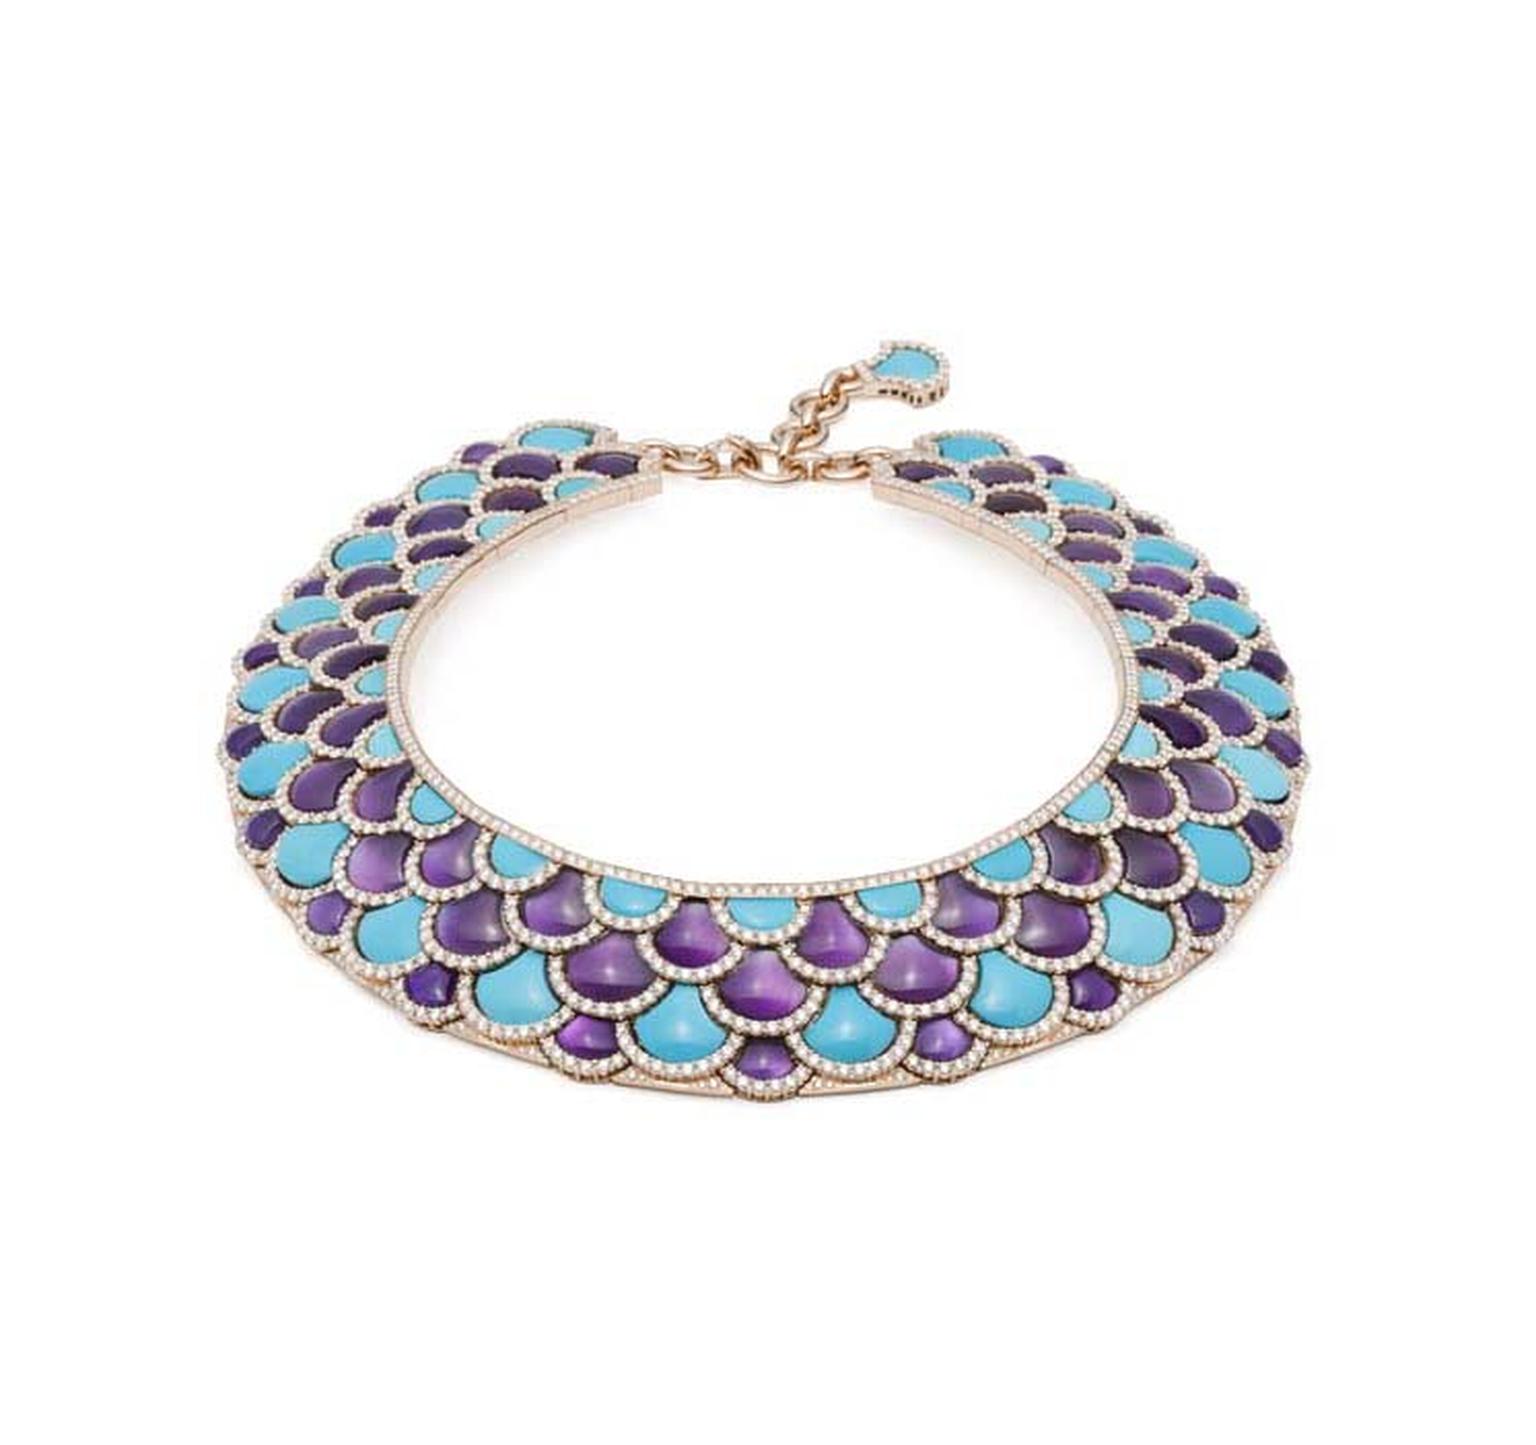 Giampiero Bodino Mosaico necklace with turquoise, amethysts and brilliant-cut diamonds.